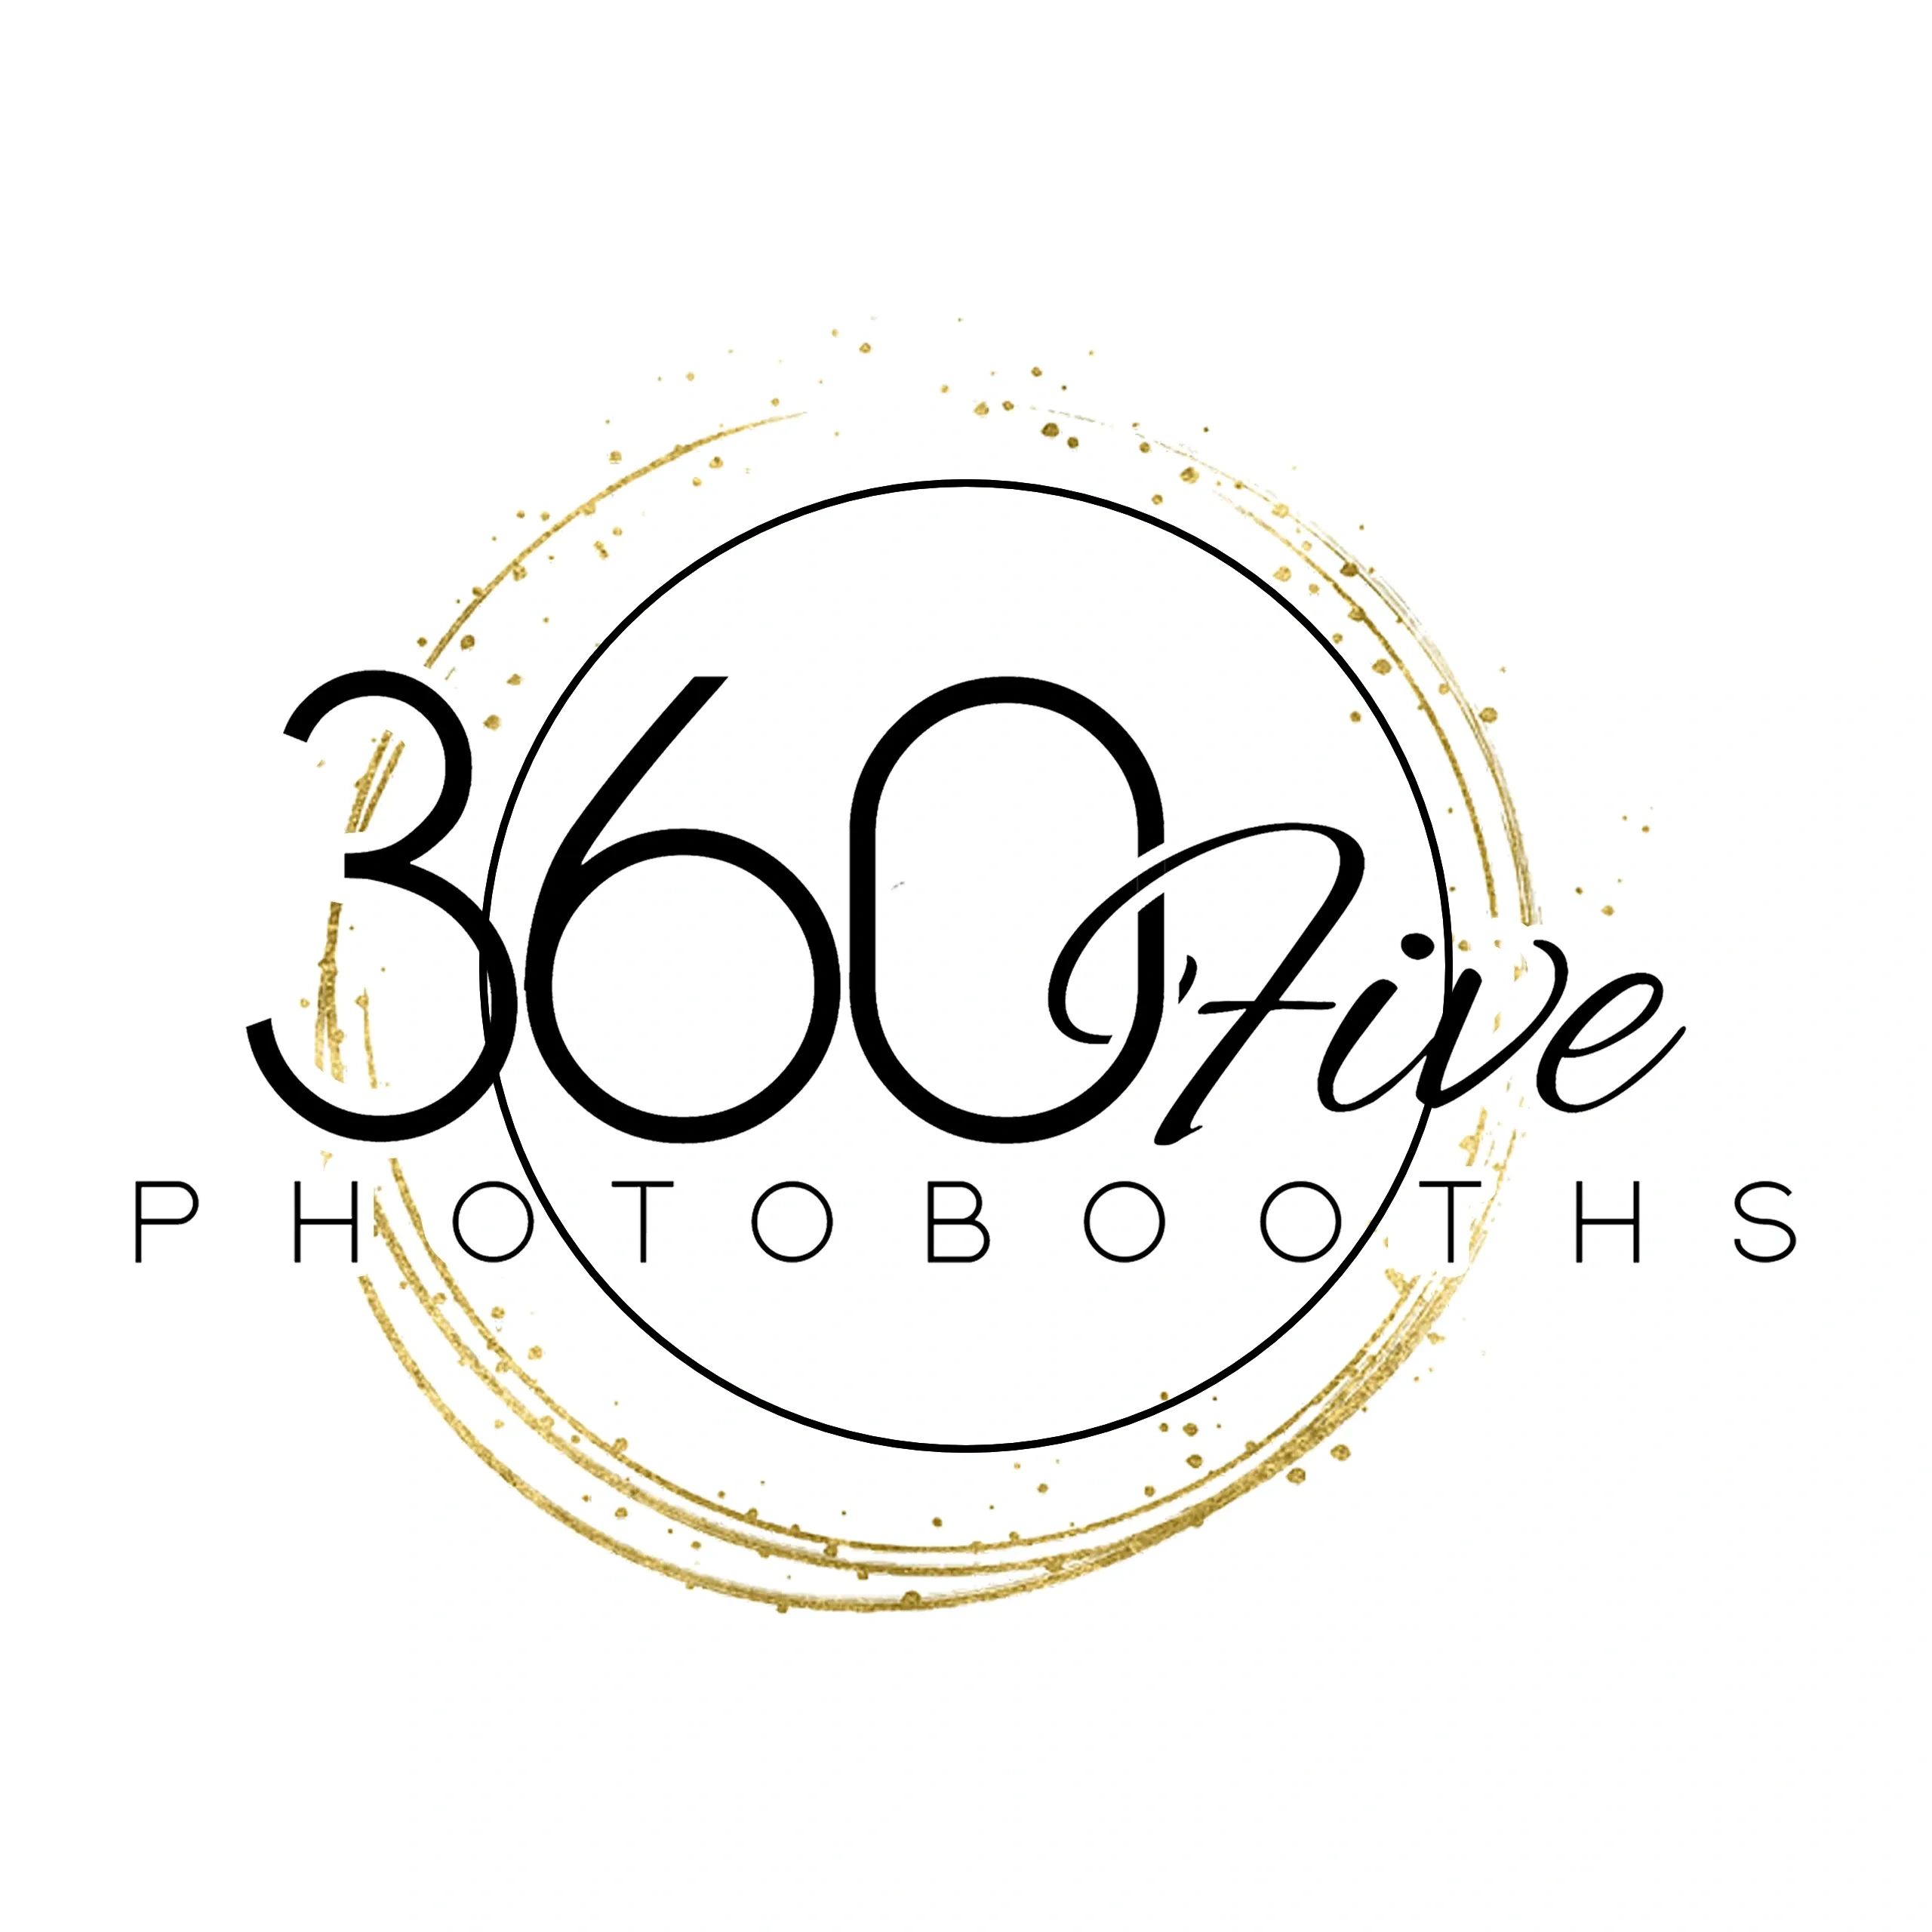 360 photo booth logo